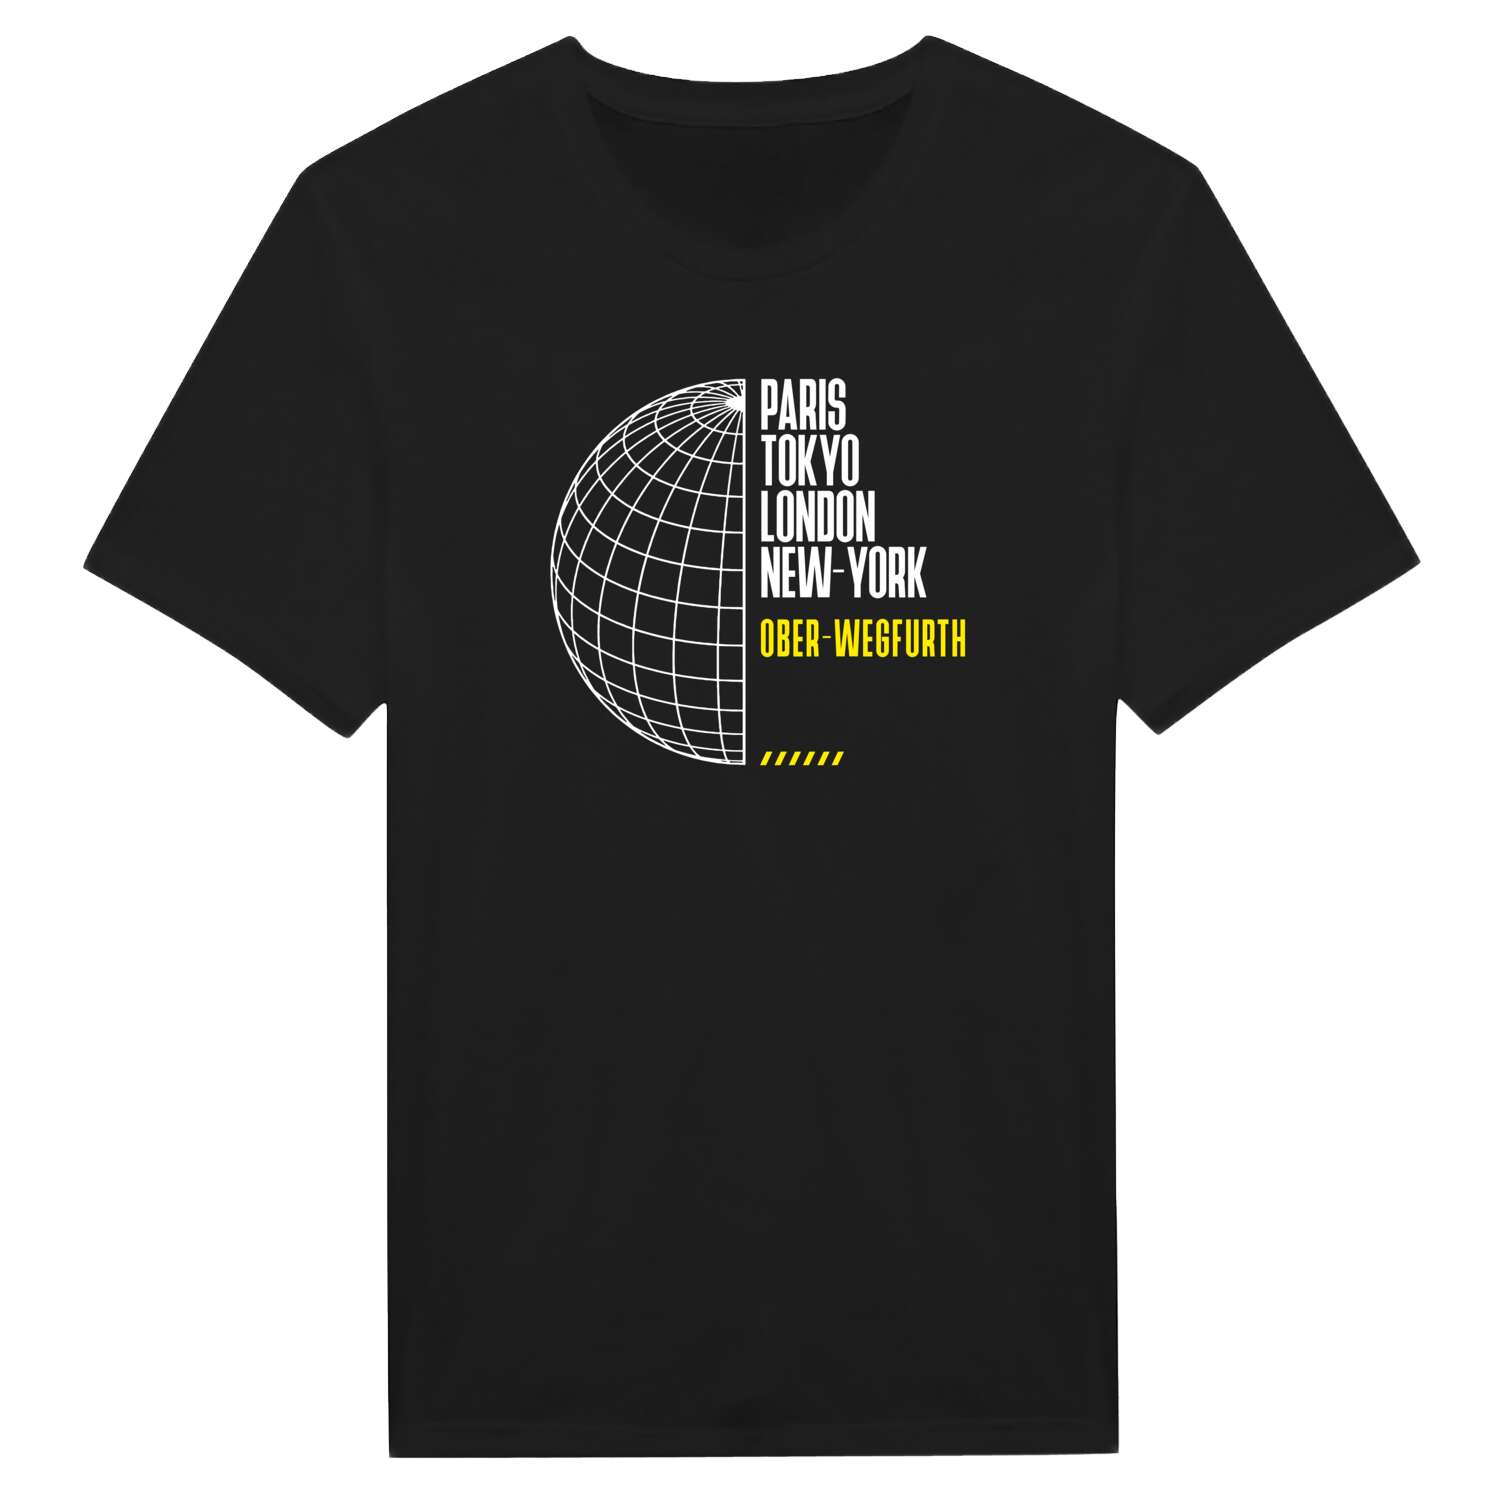 Ober-Wegfurth T-Shirt »Paris Tokyo London«